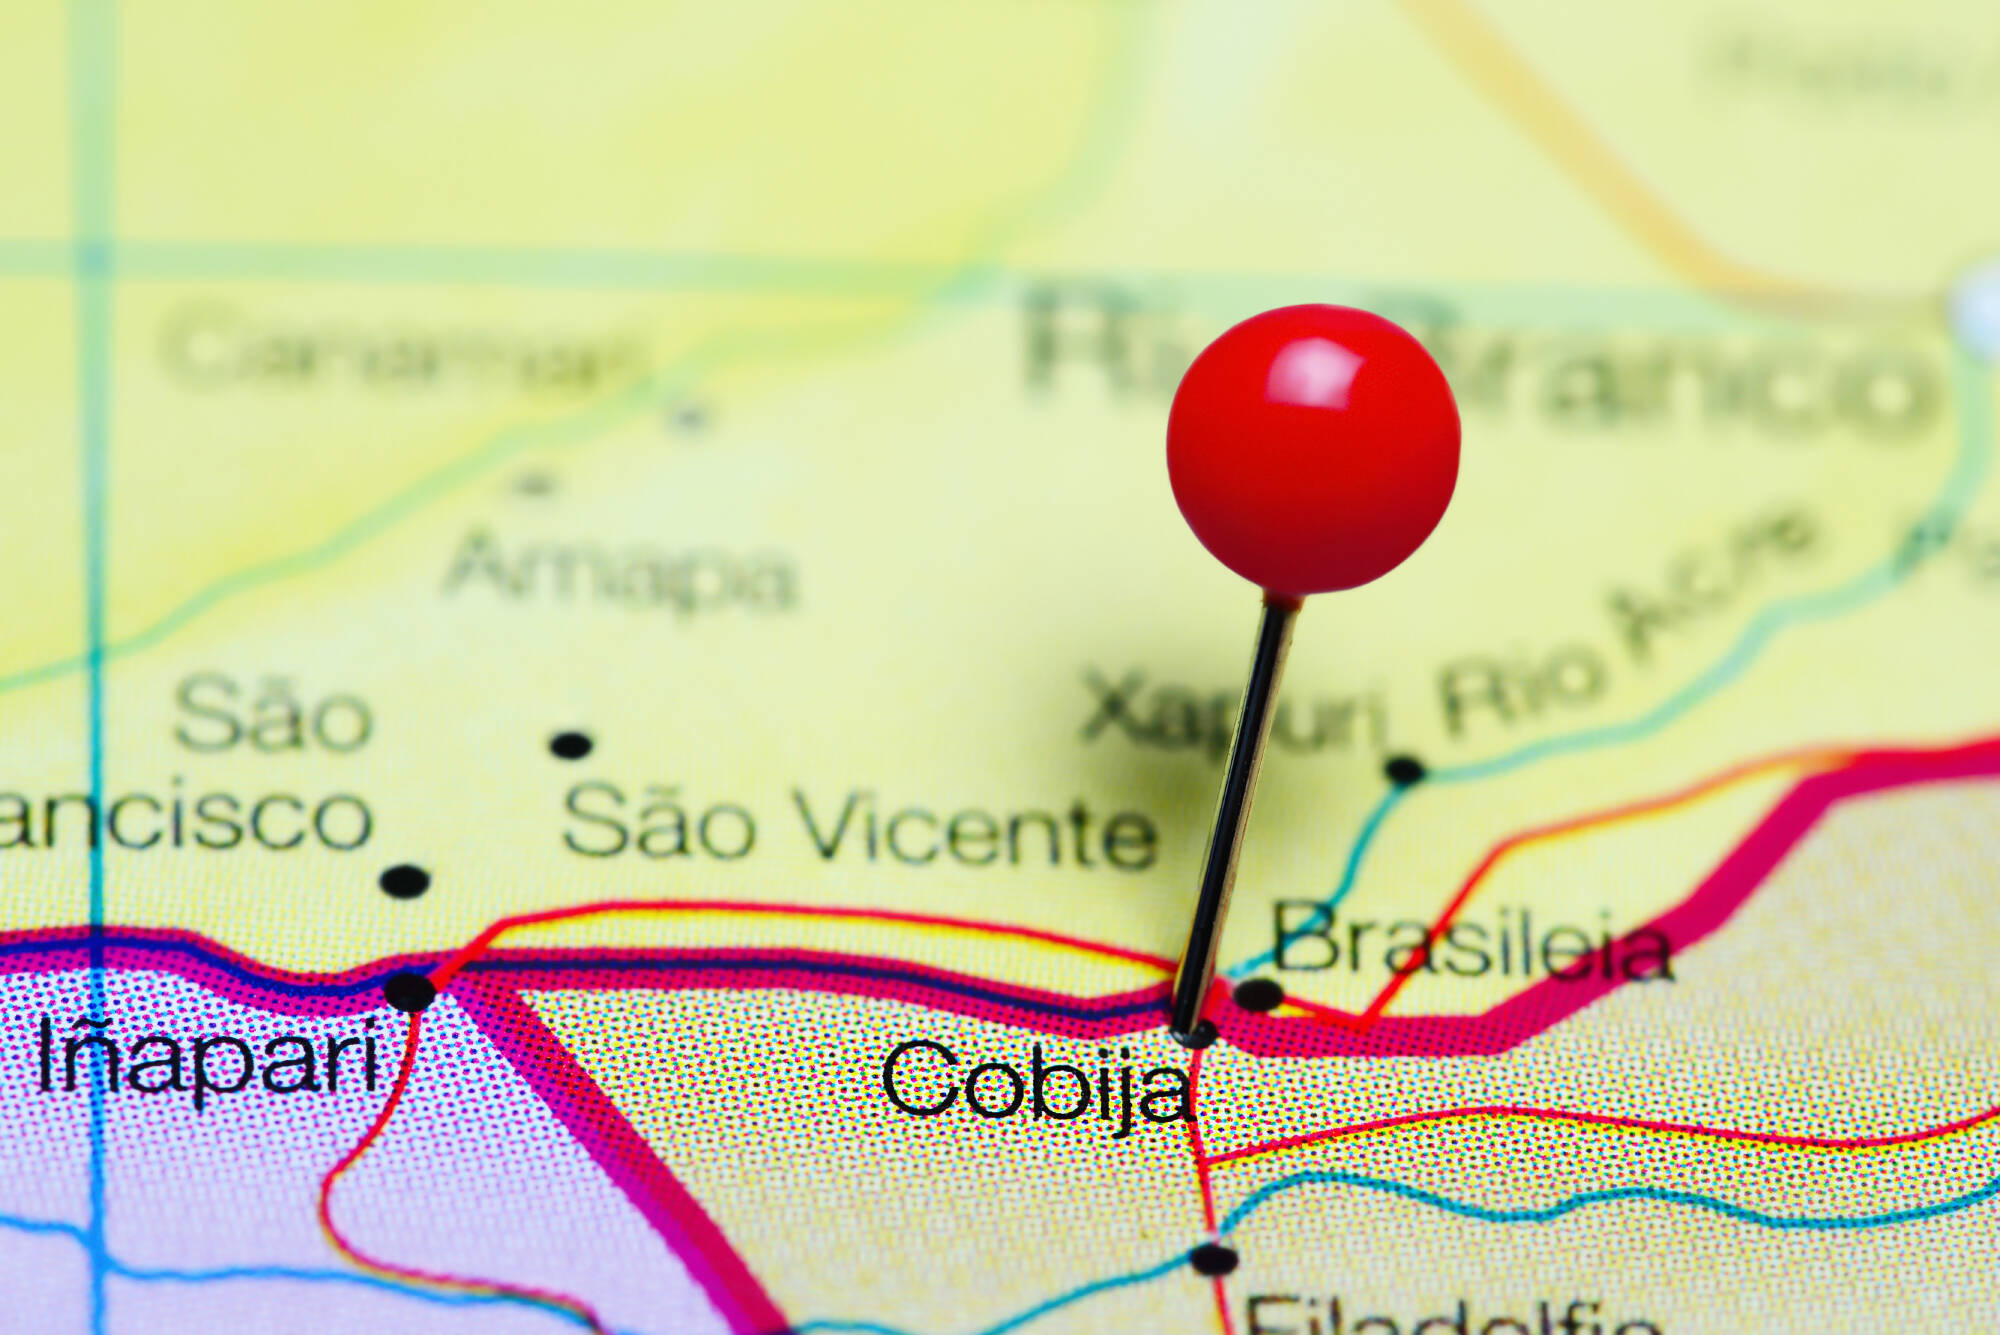 Cobija Reisen und Billigflug – Bolivien – Hotels und Flug nach Cobija